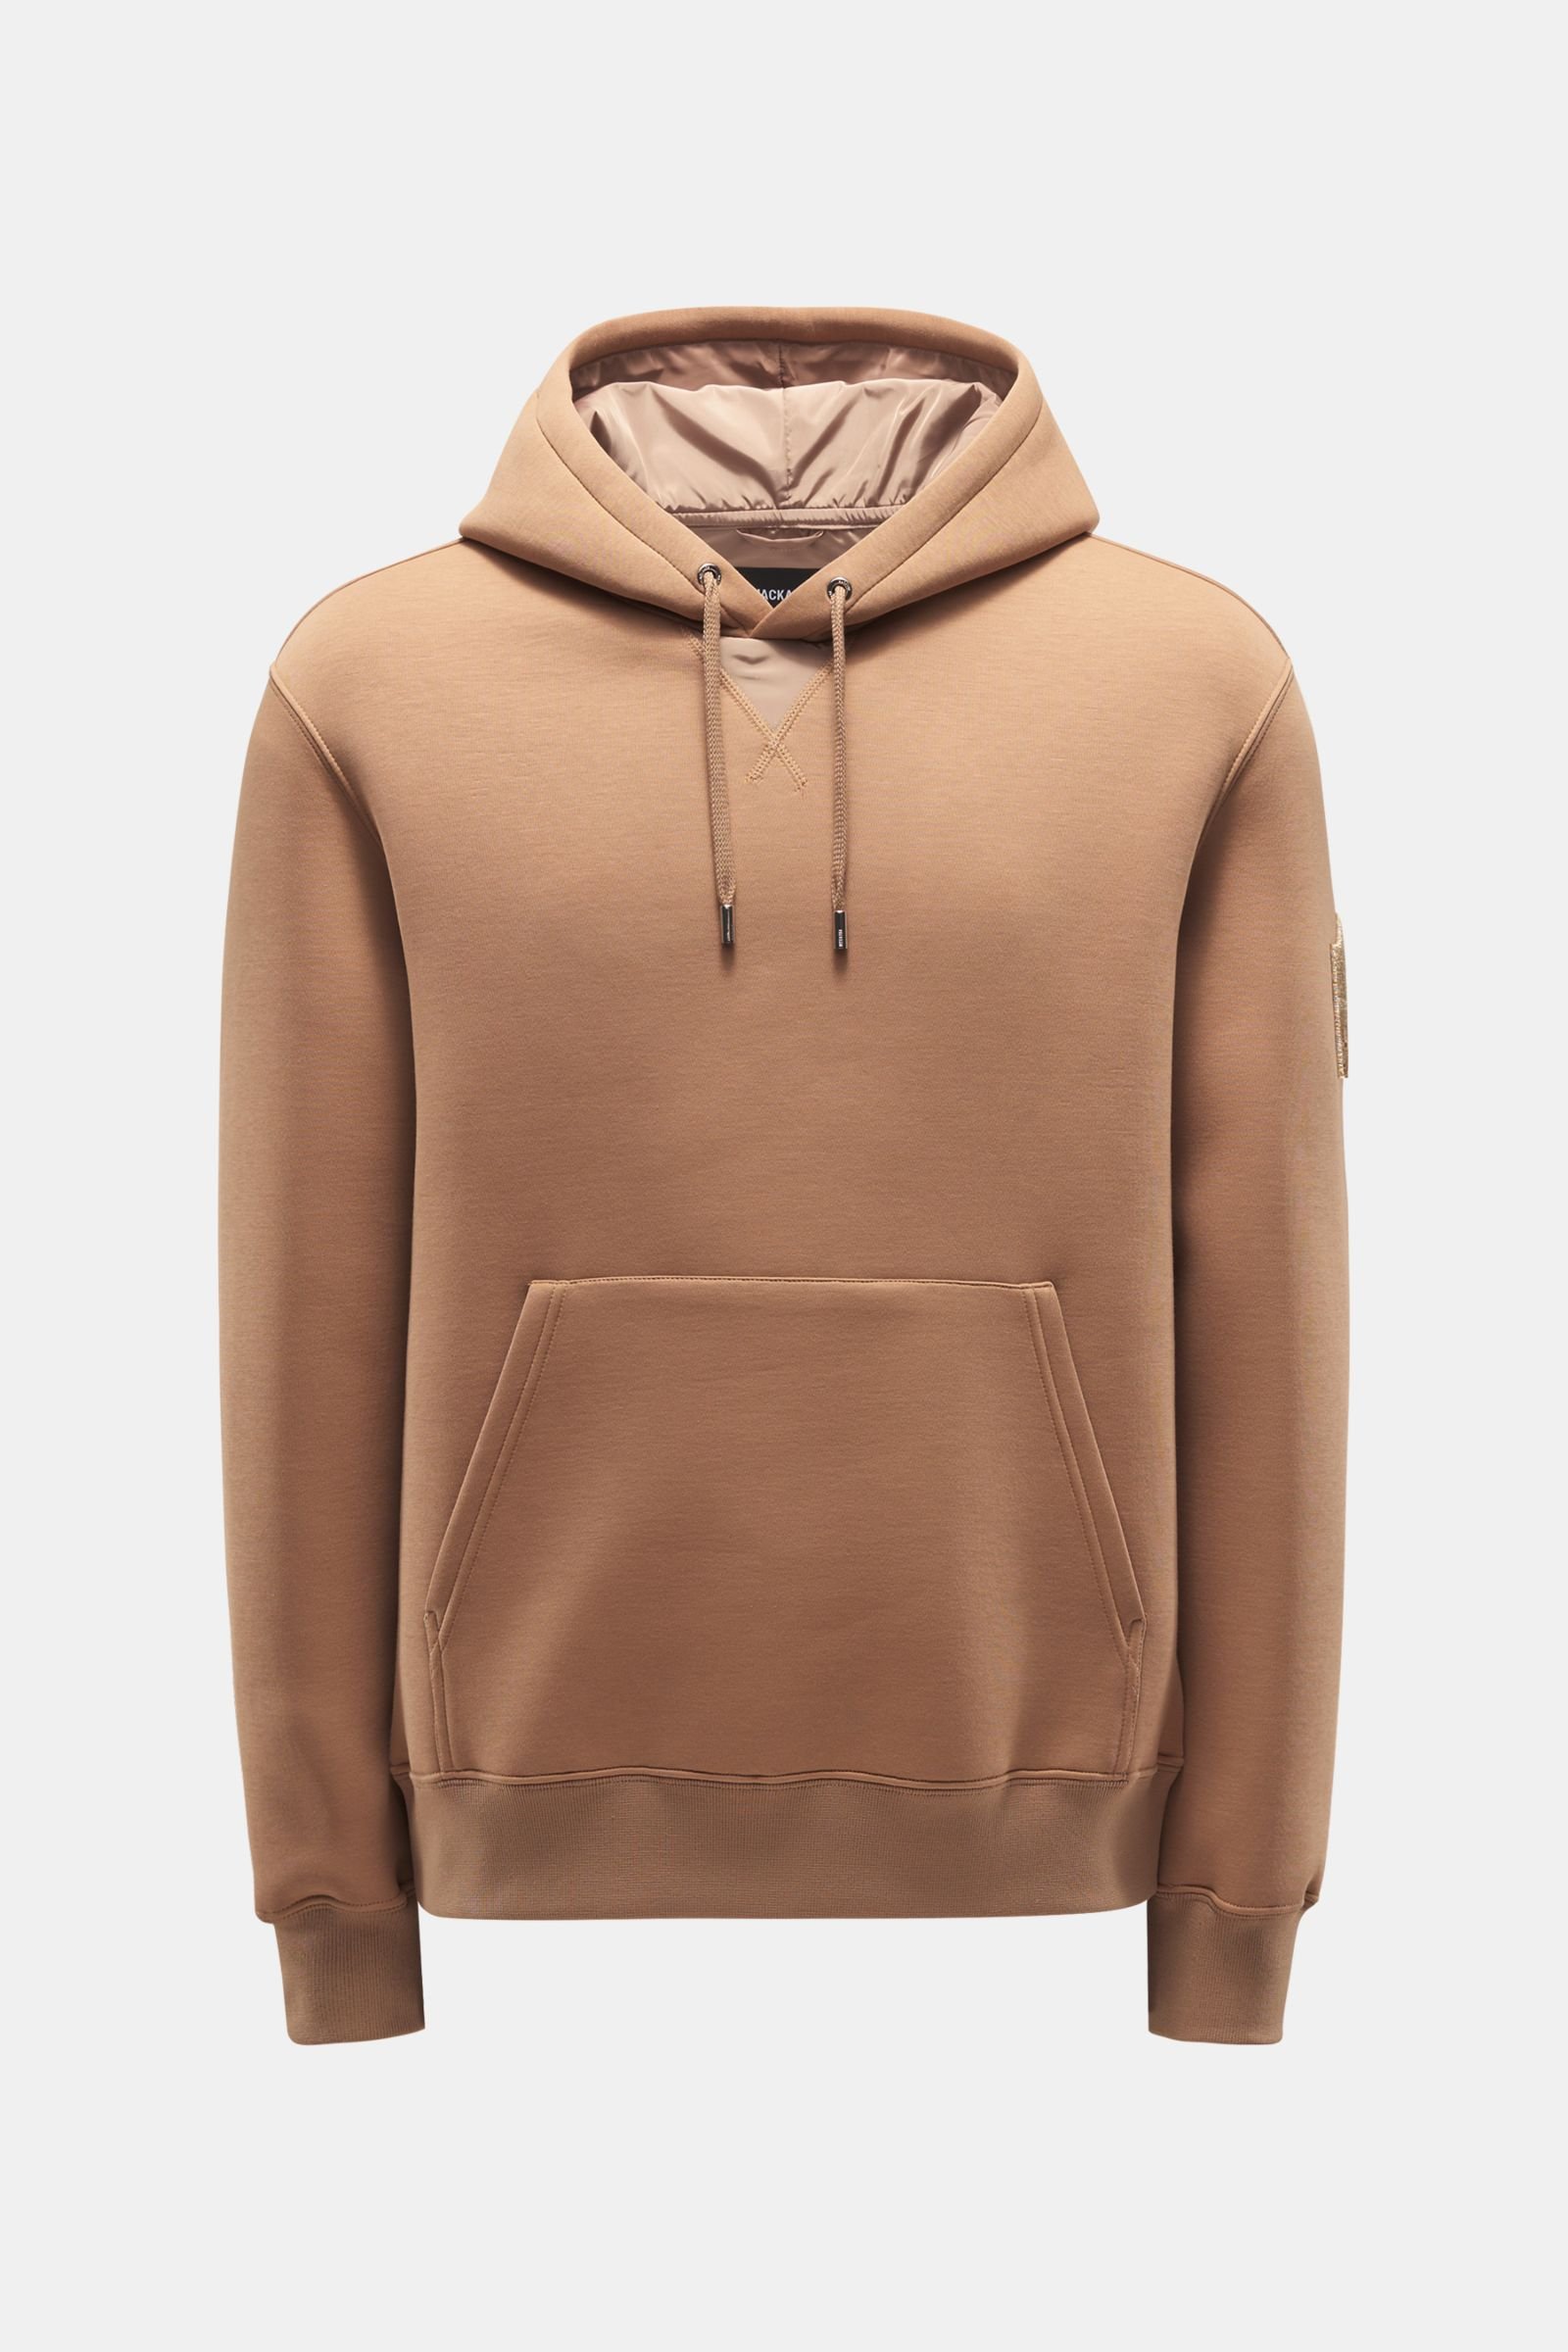 Neoprene hooded jumper 'Krys' light brown 